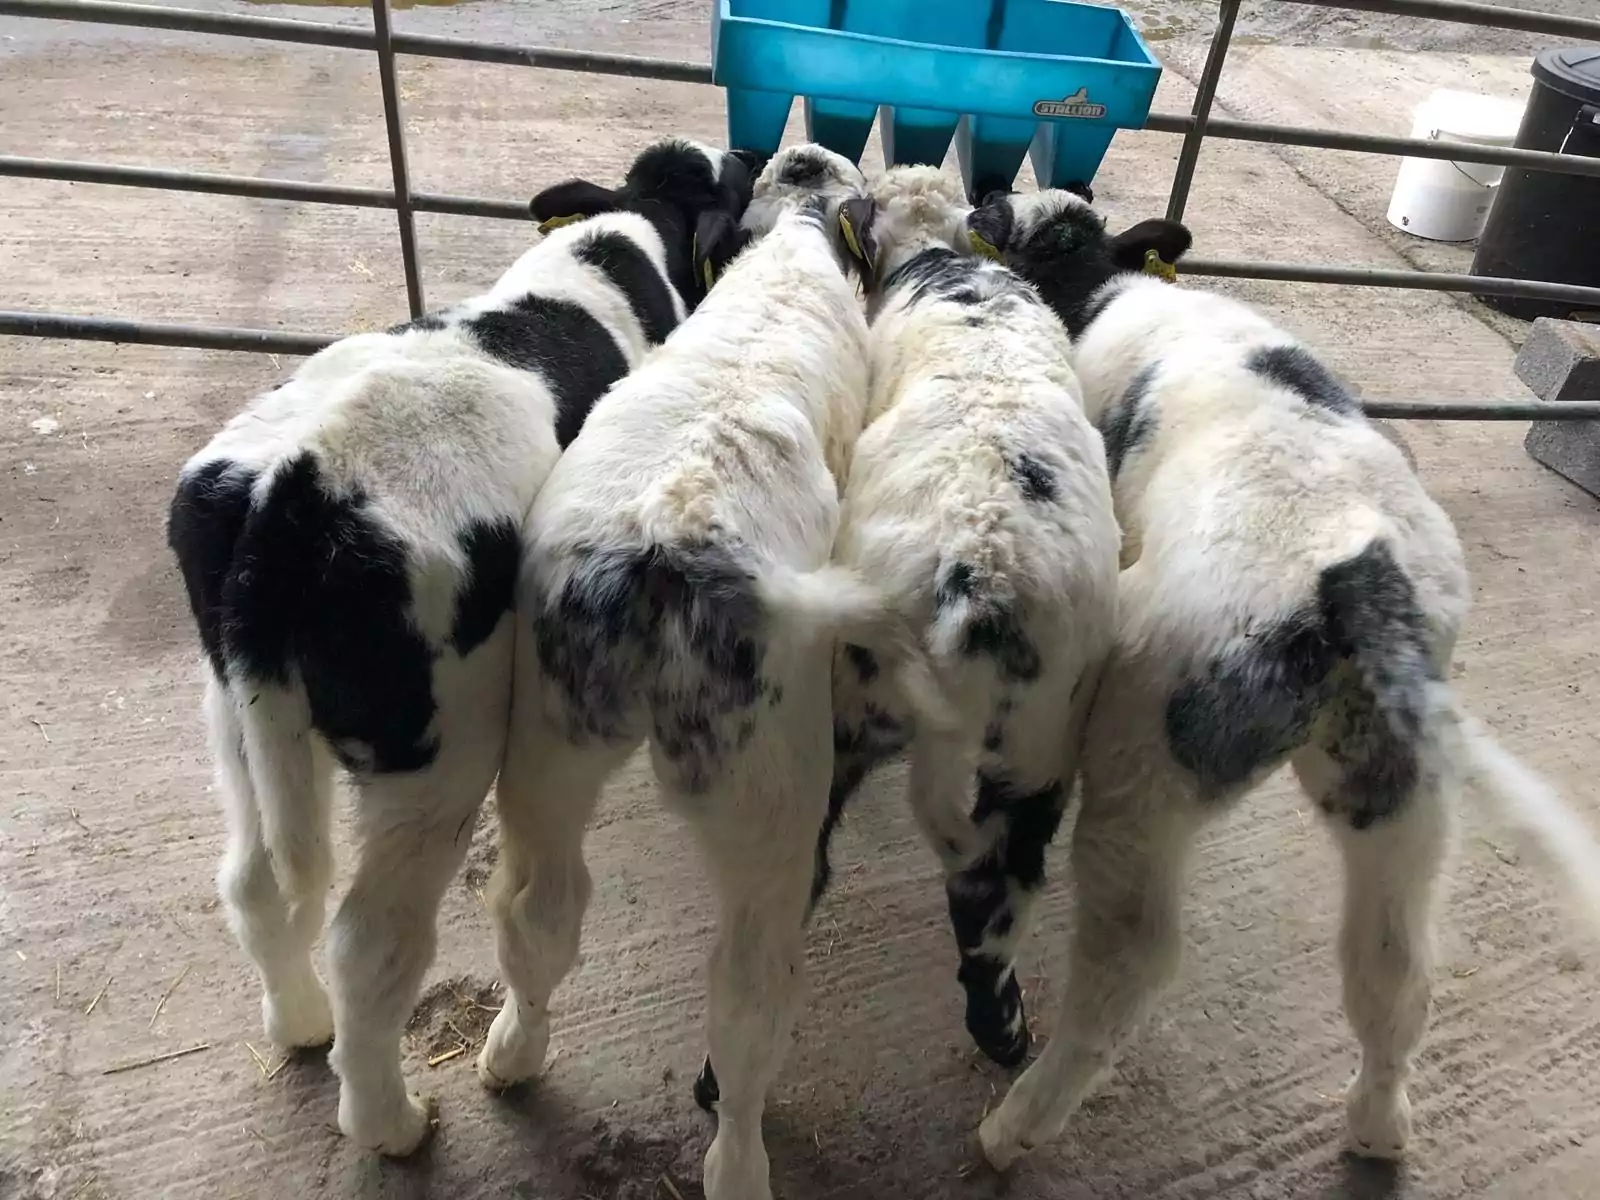 calves drinking from feeder